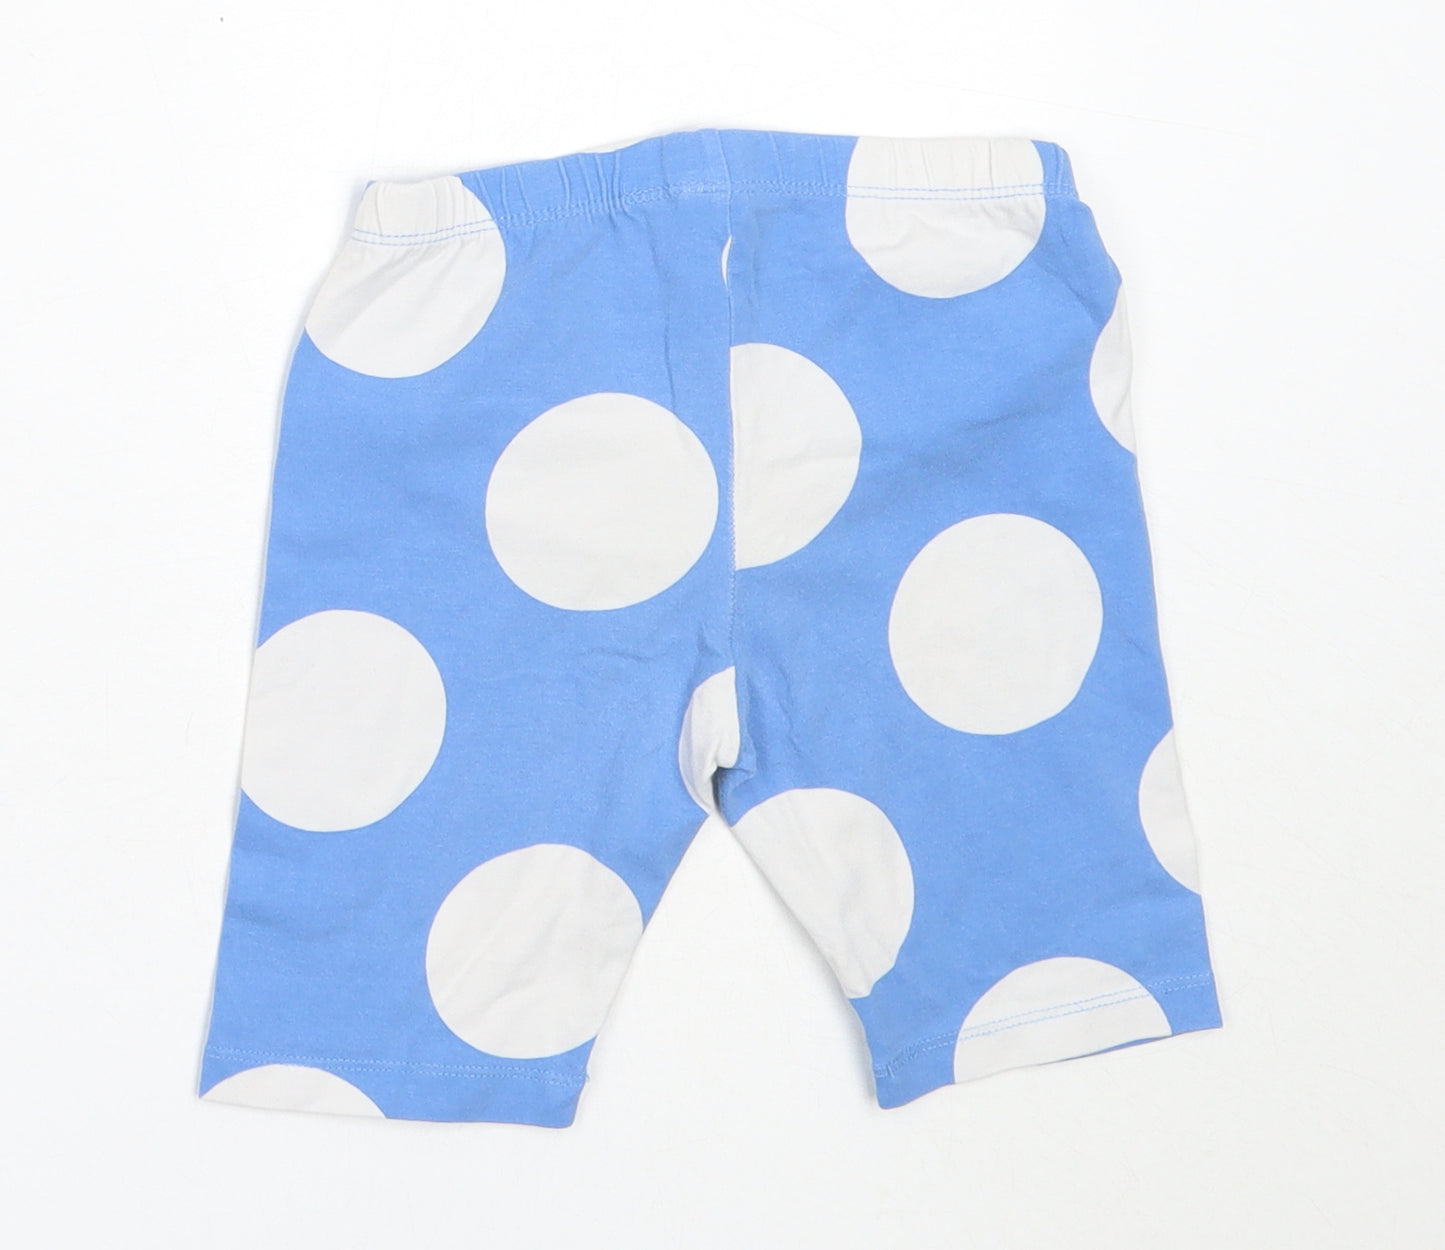 TU Girls Blue Polka Dot Cotton Compression Shorts Size 5-6 Years  Regular